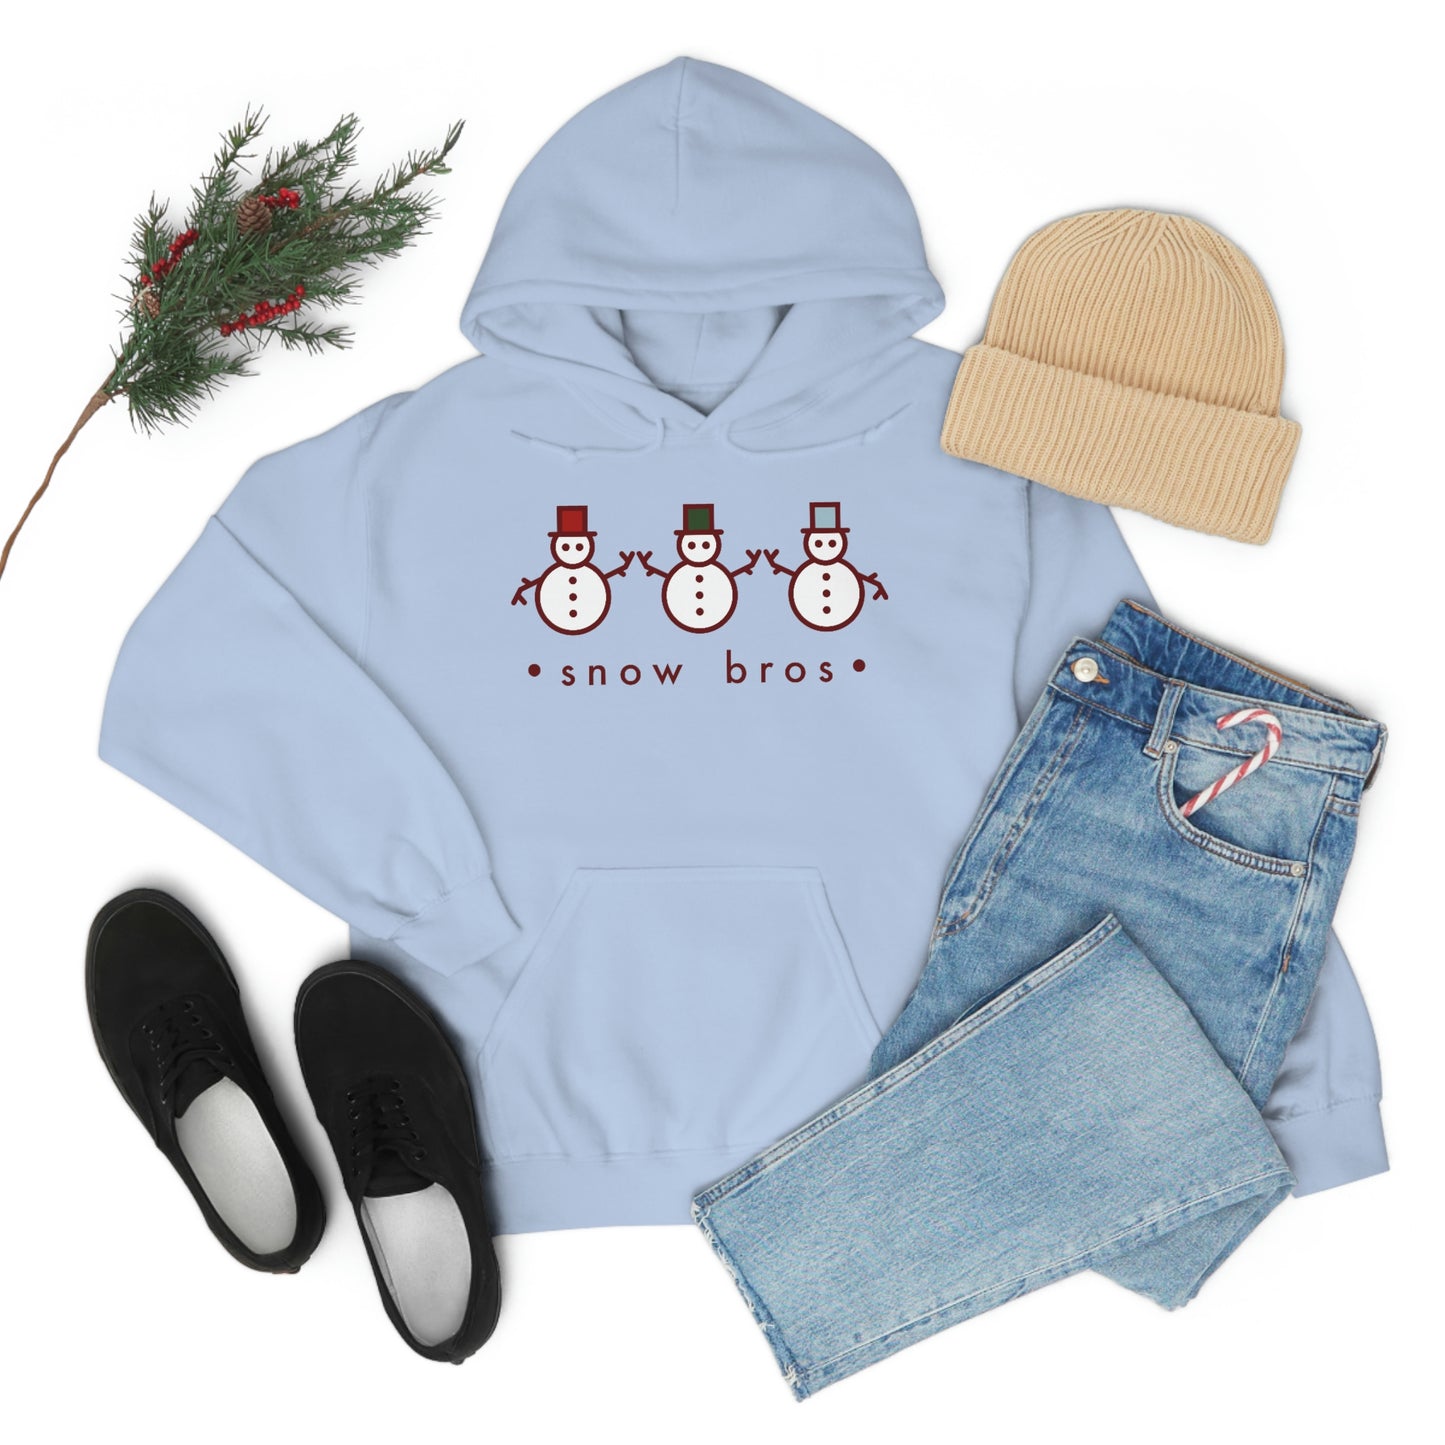 Snow bros hoodies